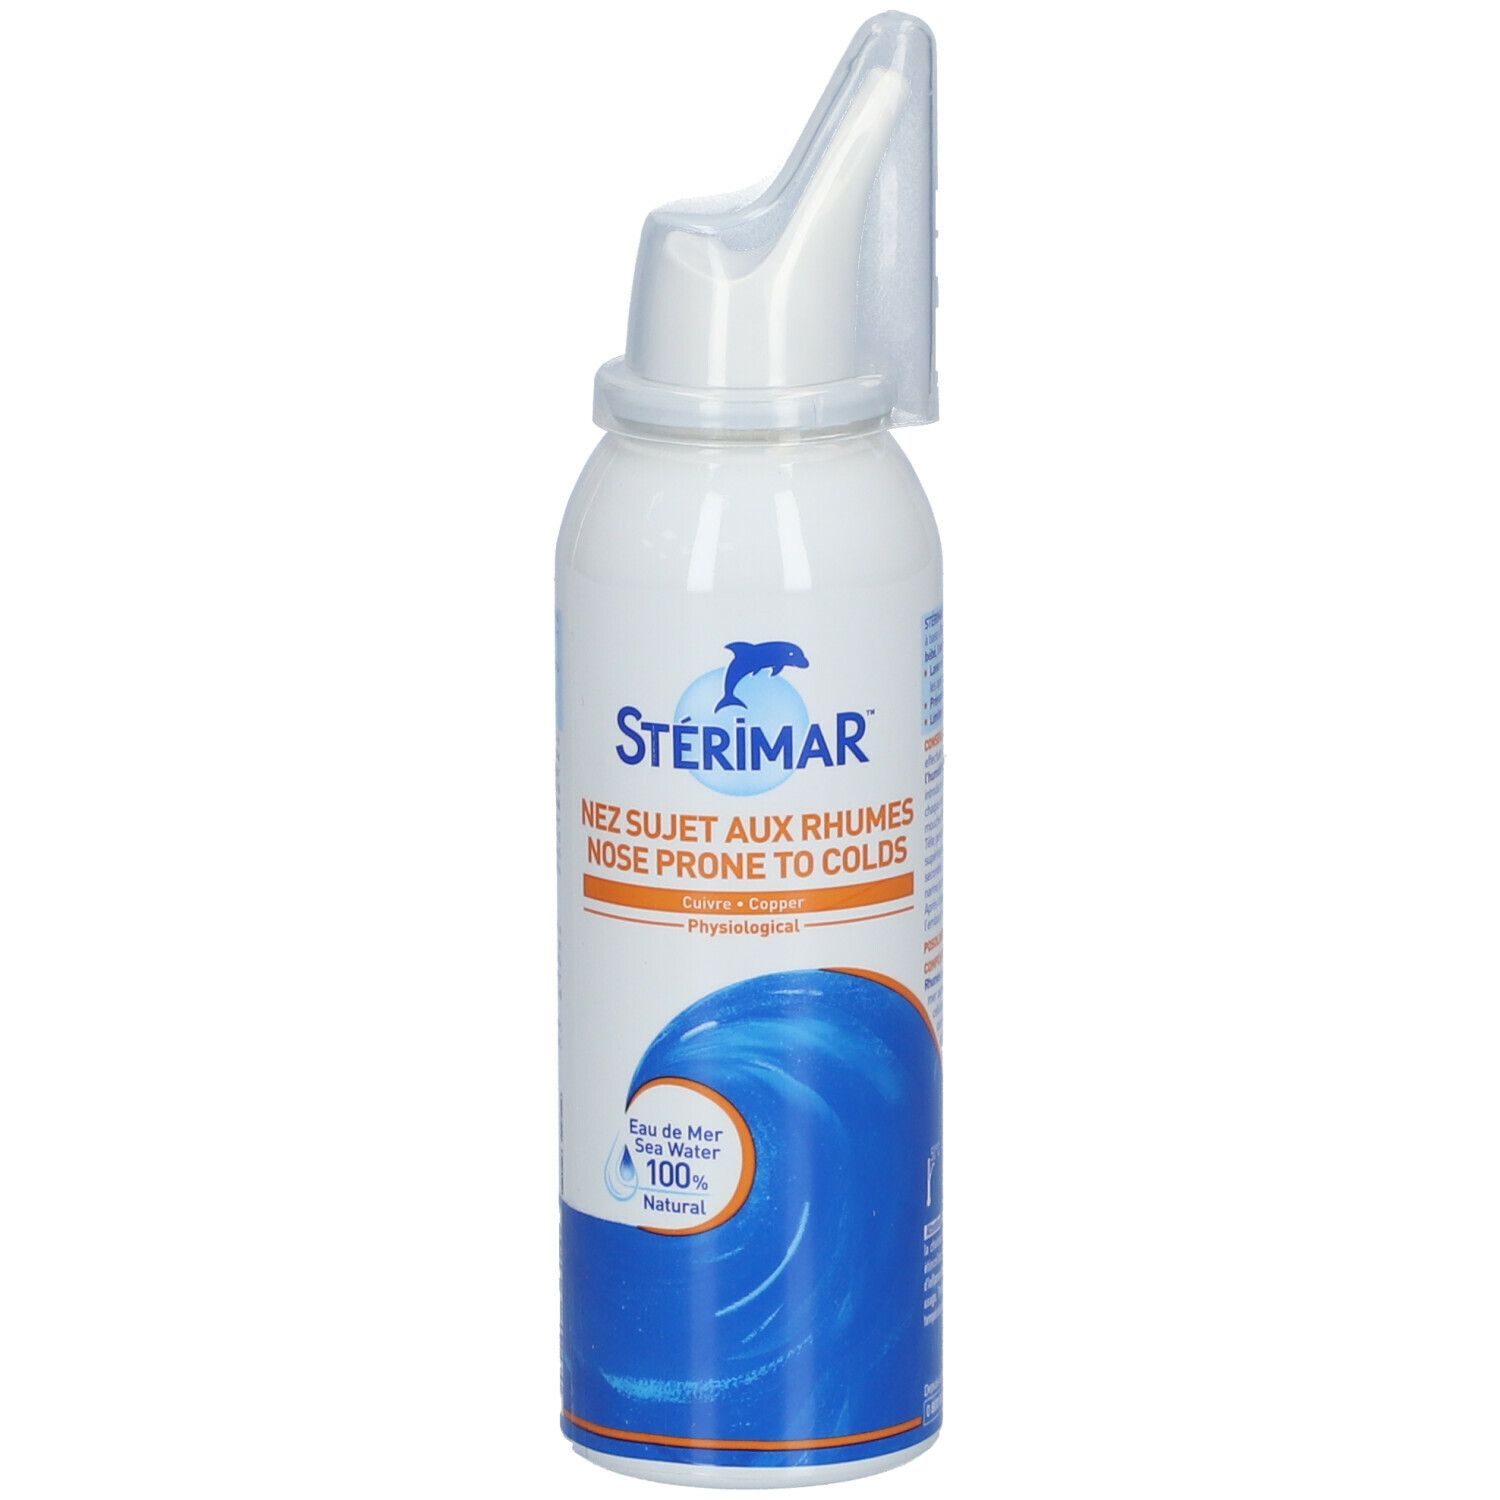 Sterimar eau de mer CU solution nasale